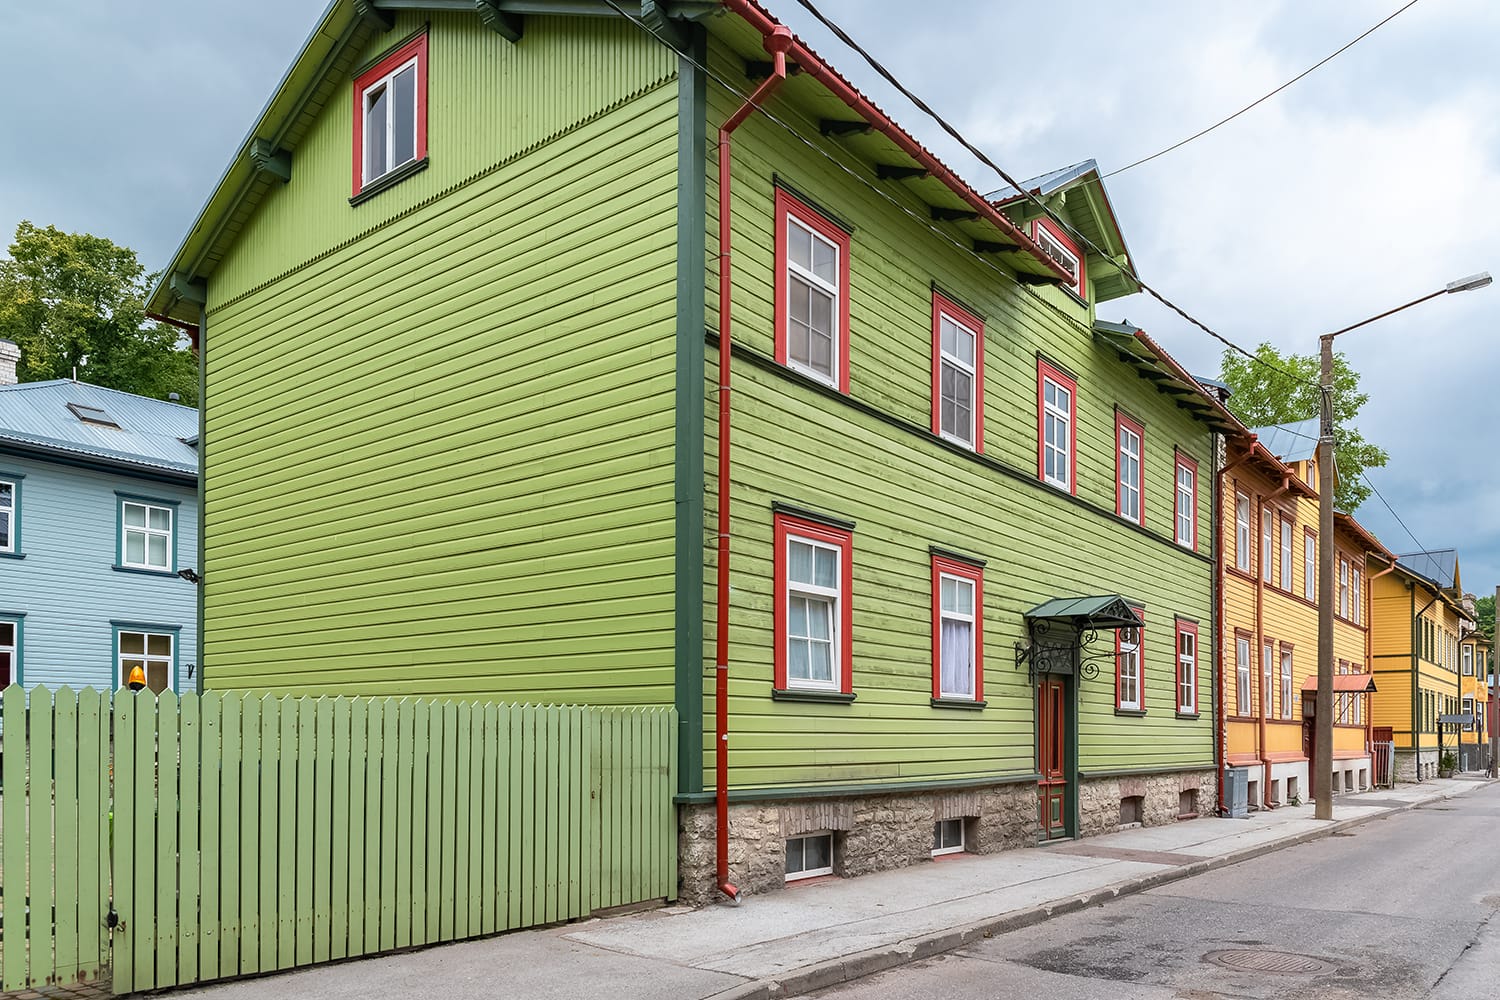 Tallinn in Estonia, wooden colorful houses, typical facades in Kalamaja